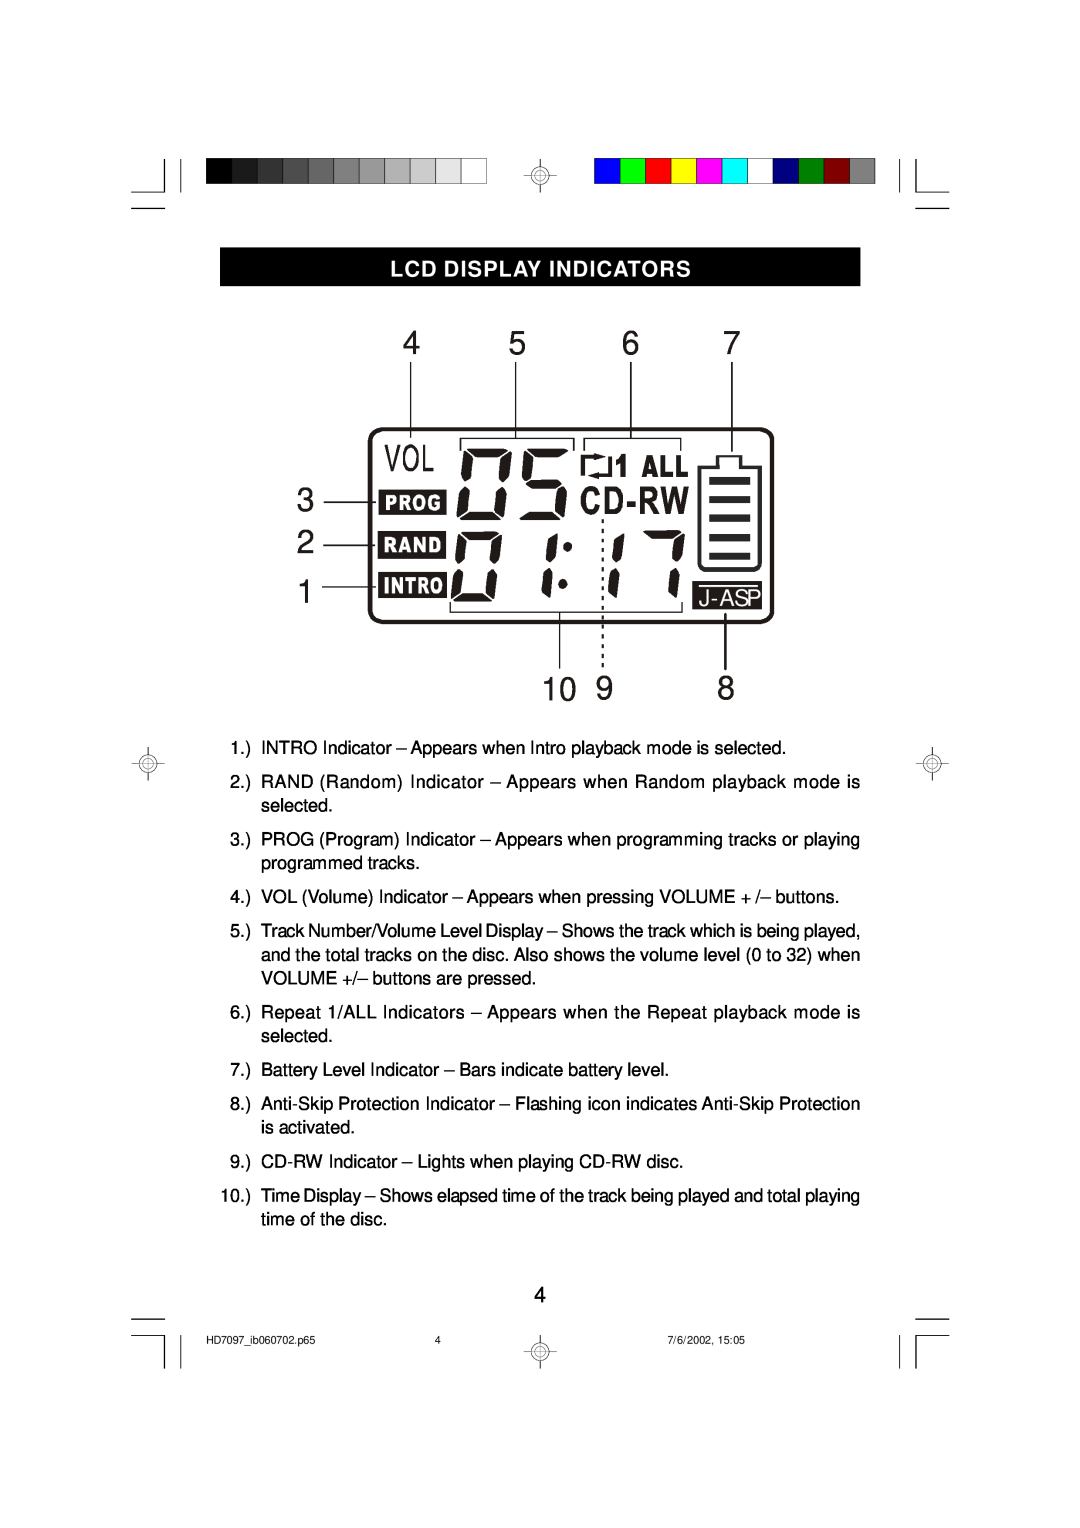 Emerson HD7097 owner manual Lcd Display Indicators, J-Asp 